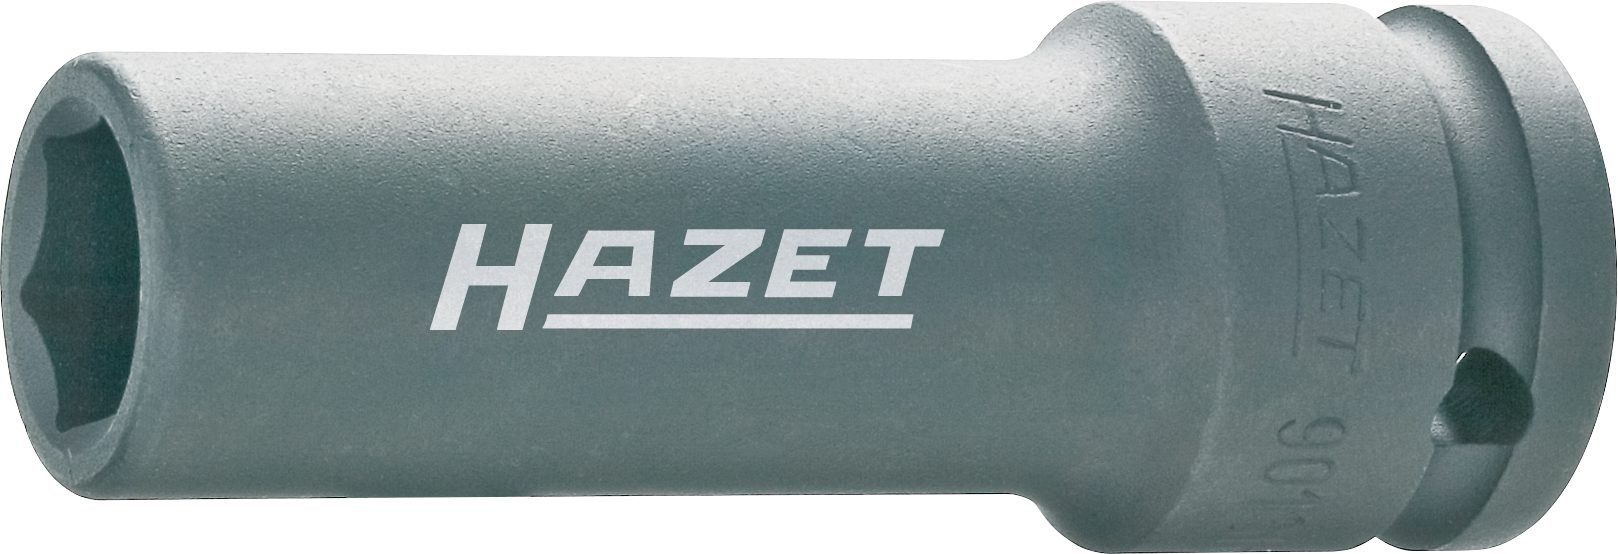 HAZET Steckschlüssel Hazet Kraft-Steckschlüssel-Einsatz (6kt), 901SLG-21 | Steckschlüssel